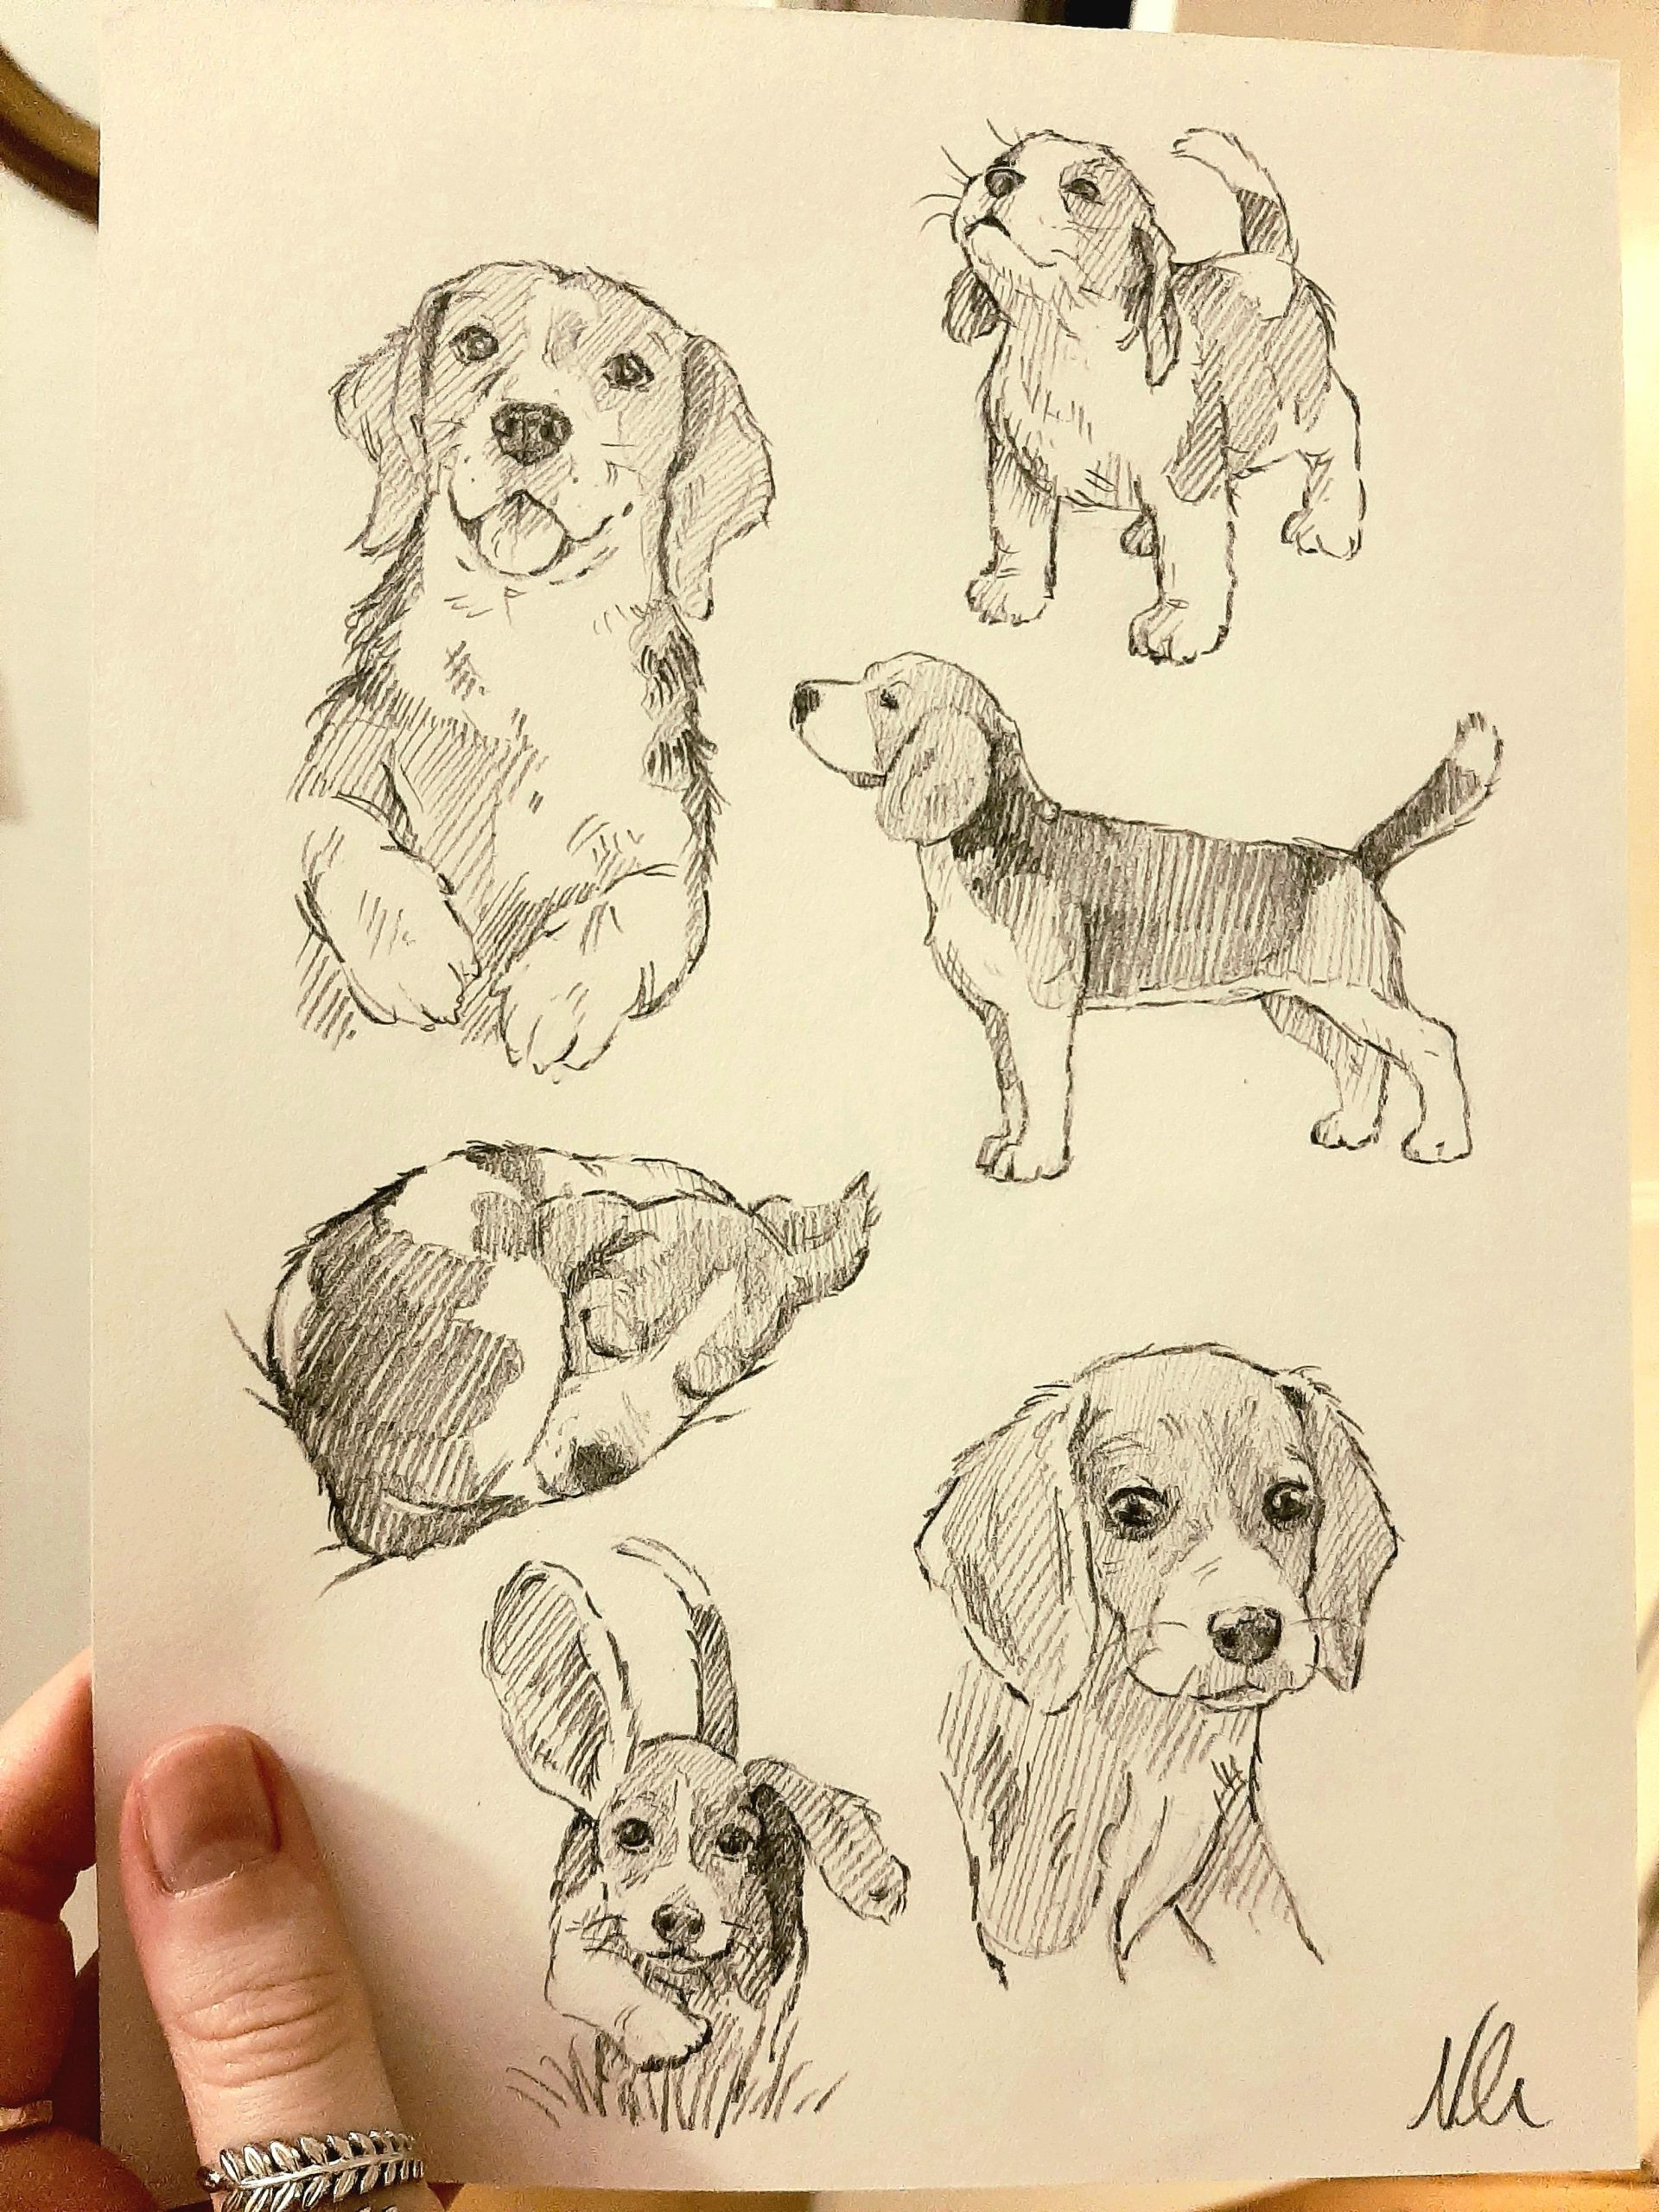 I drew a beagle collage